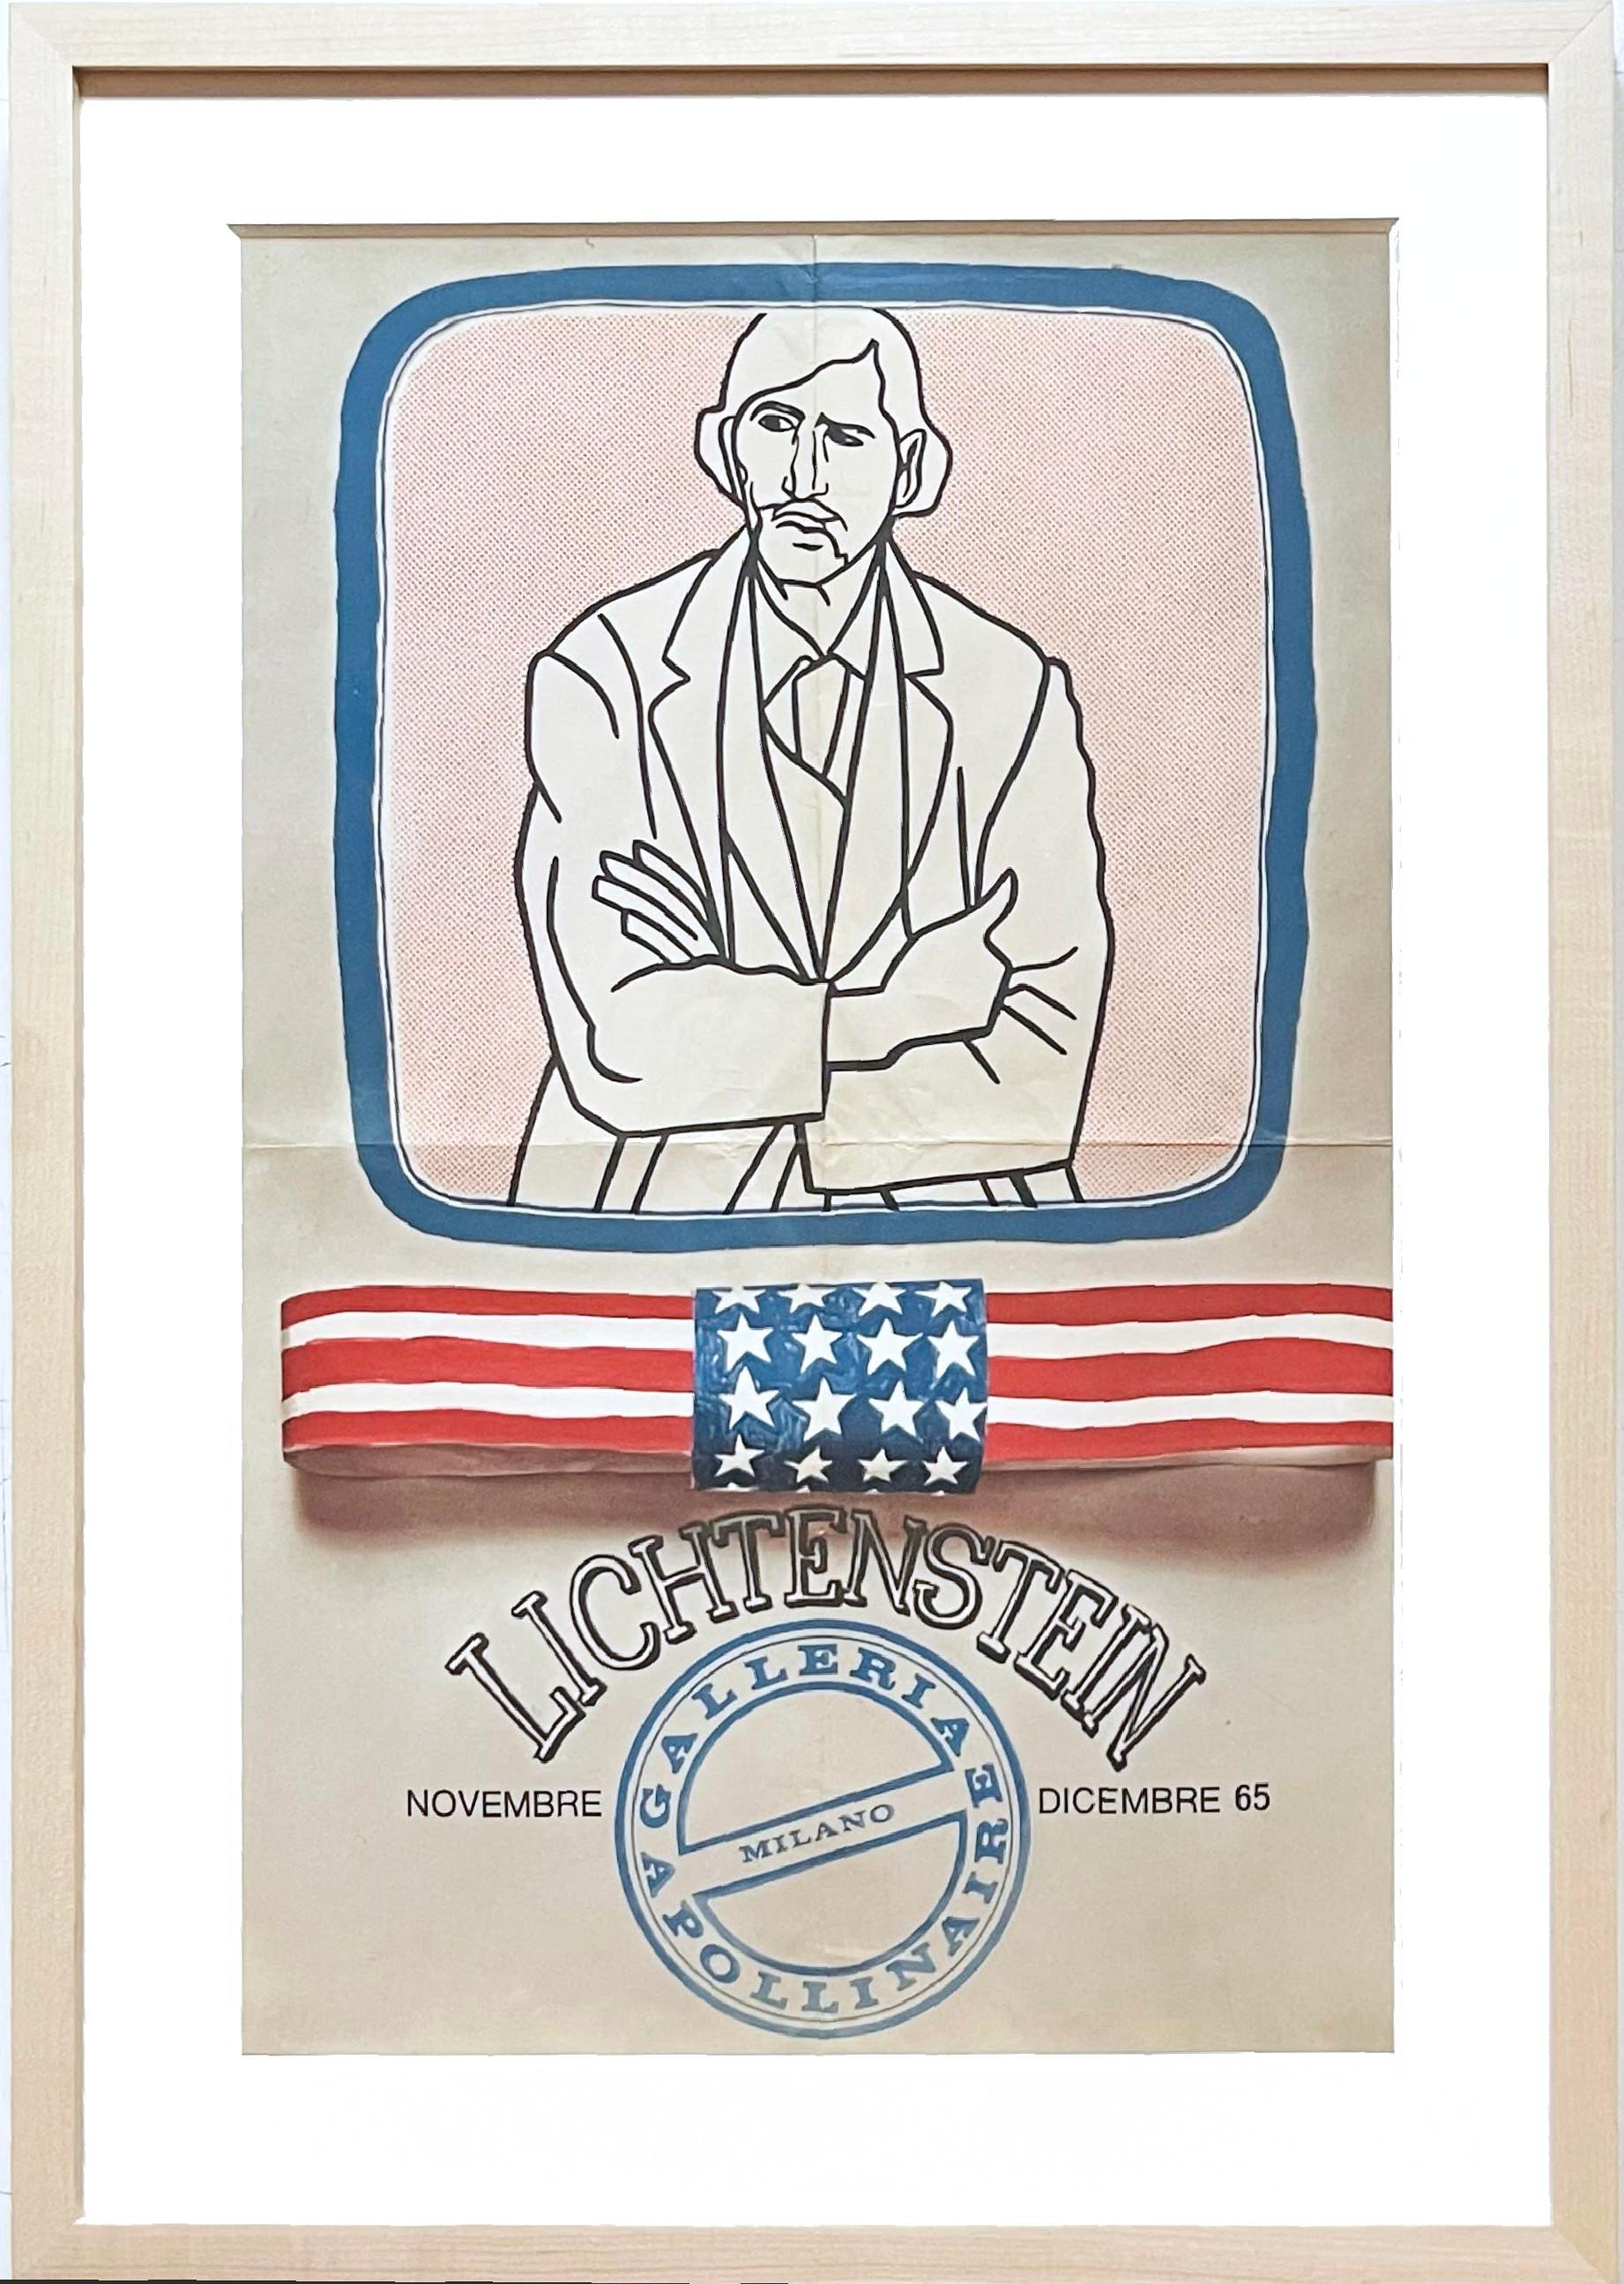 Roy Lichtenstein Abstract Print - Historic 1960s exhibition invitation for Galleria Apollinaire